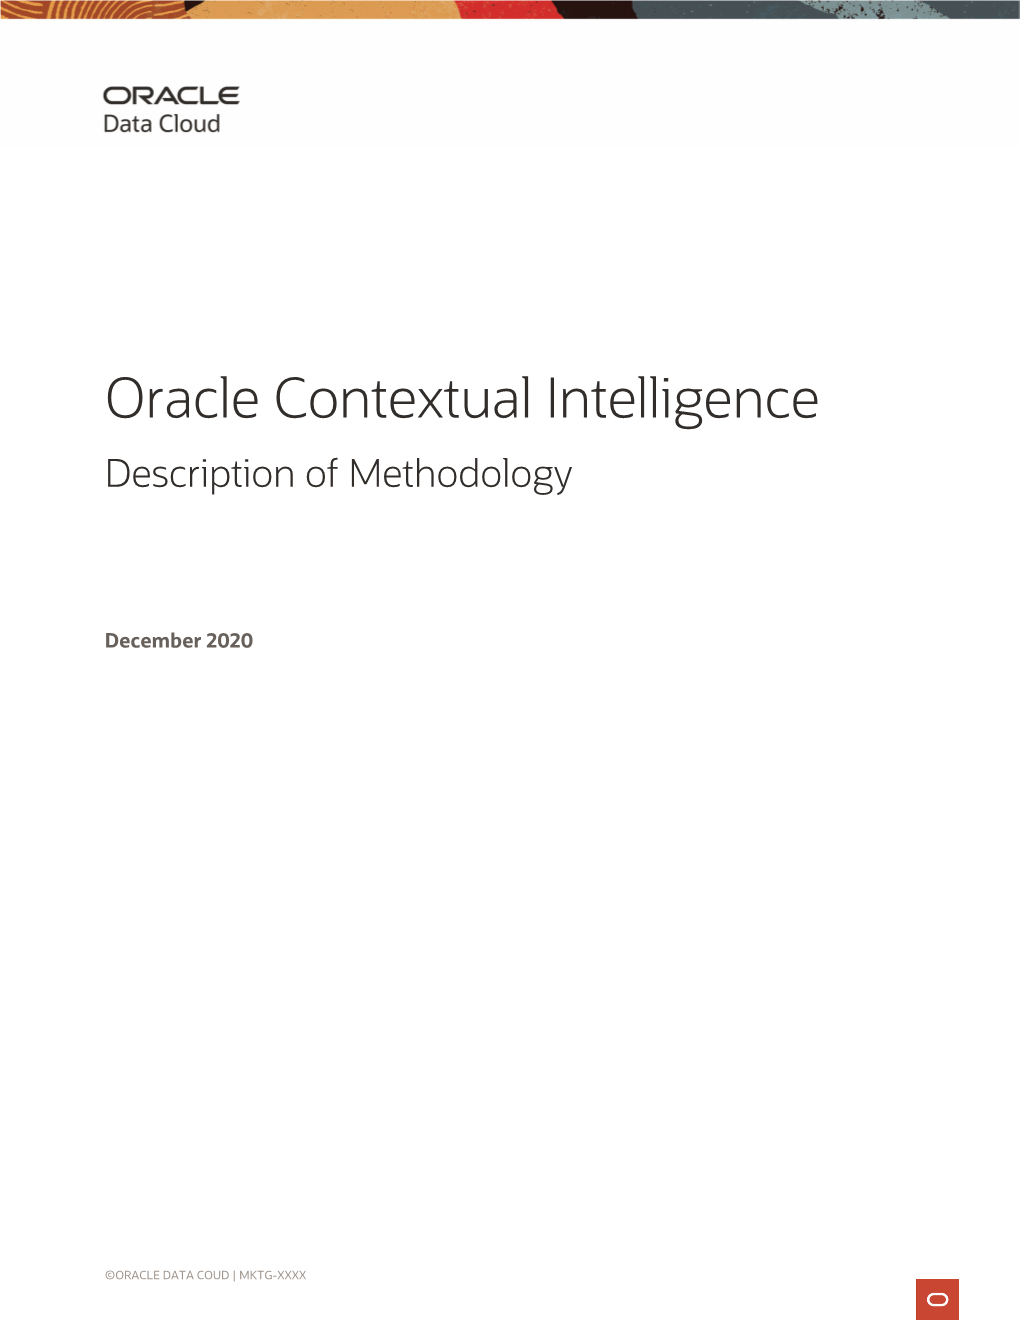 Oracle Contextual Intelligence Description of Methodology